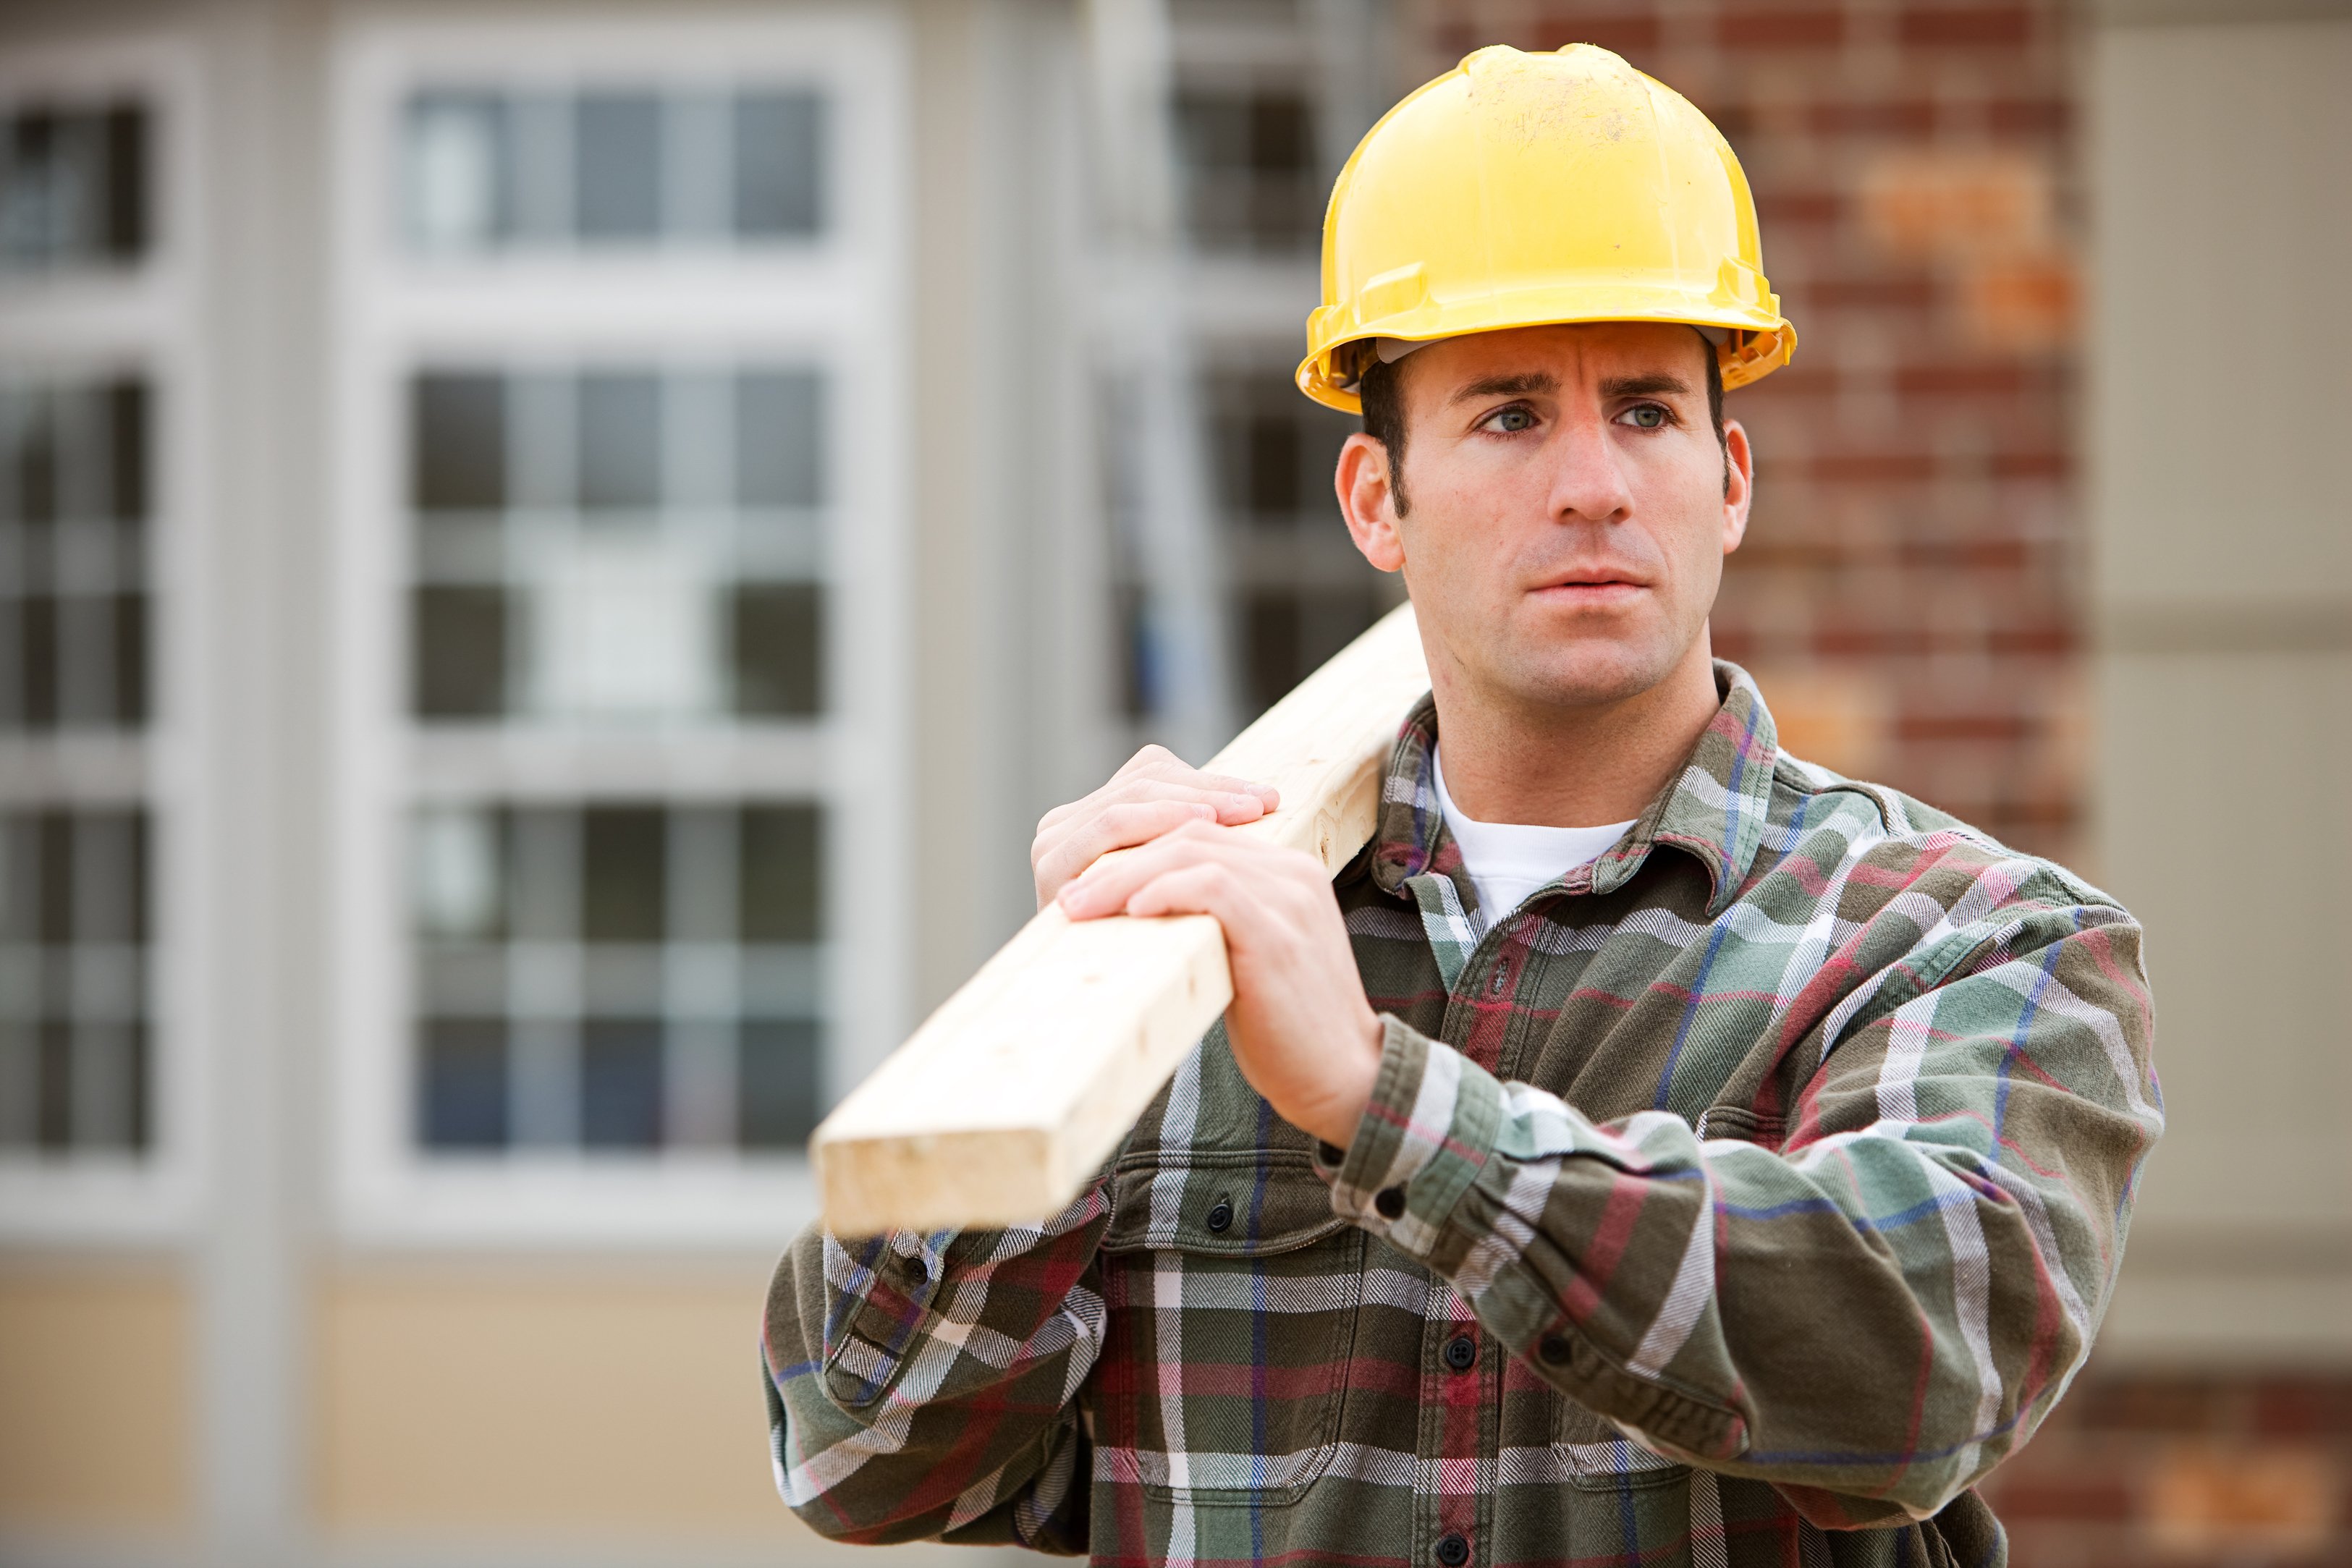 Builders insurance